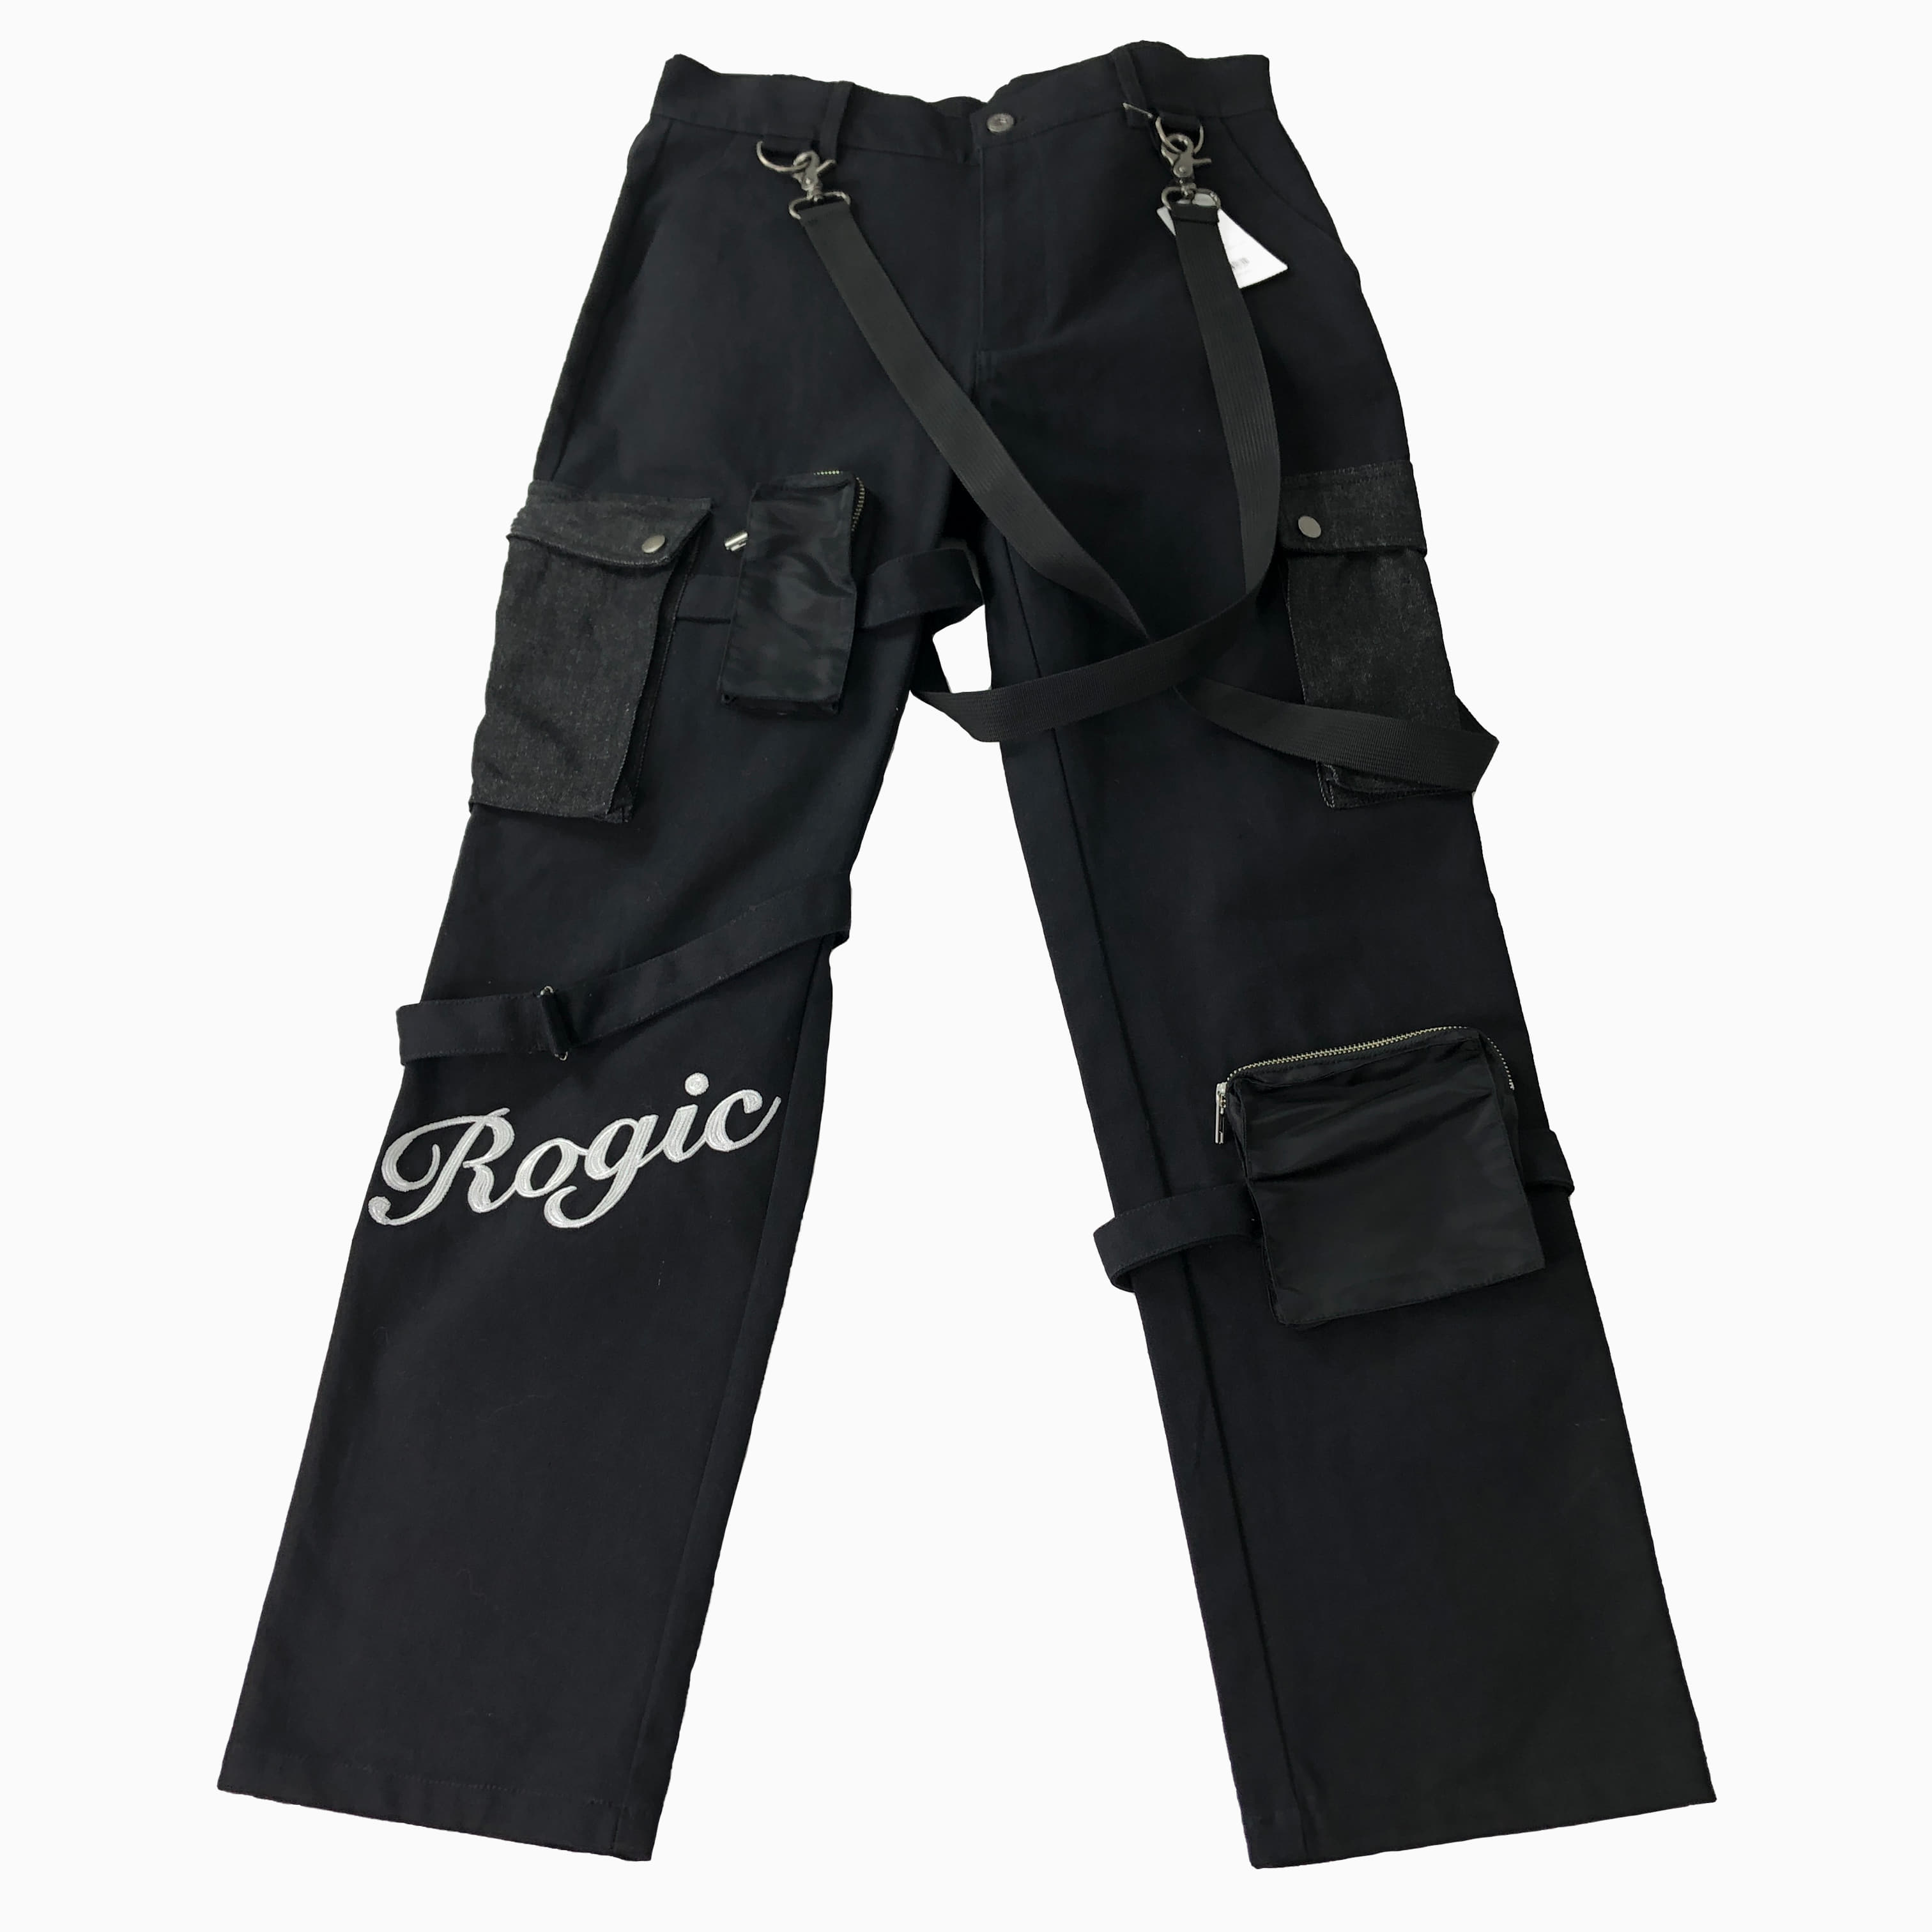 [Rogic] Millitary Suspender Pants BK - Size M